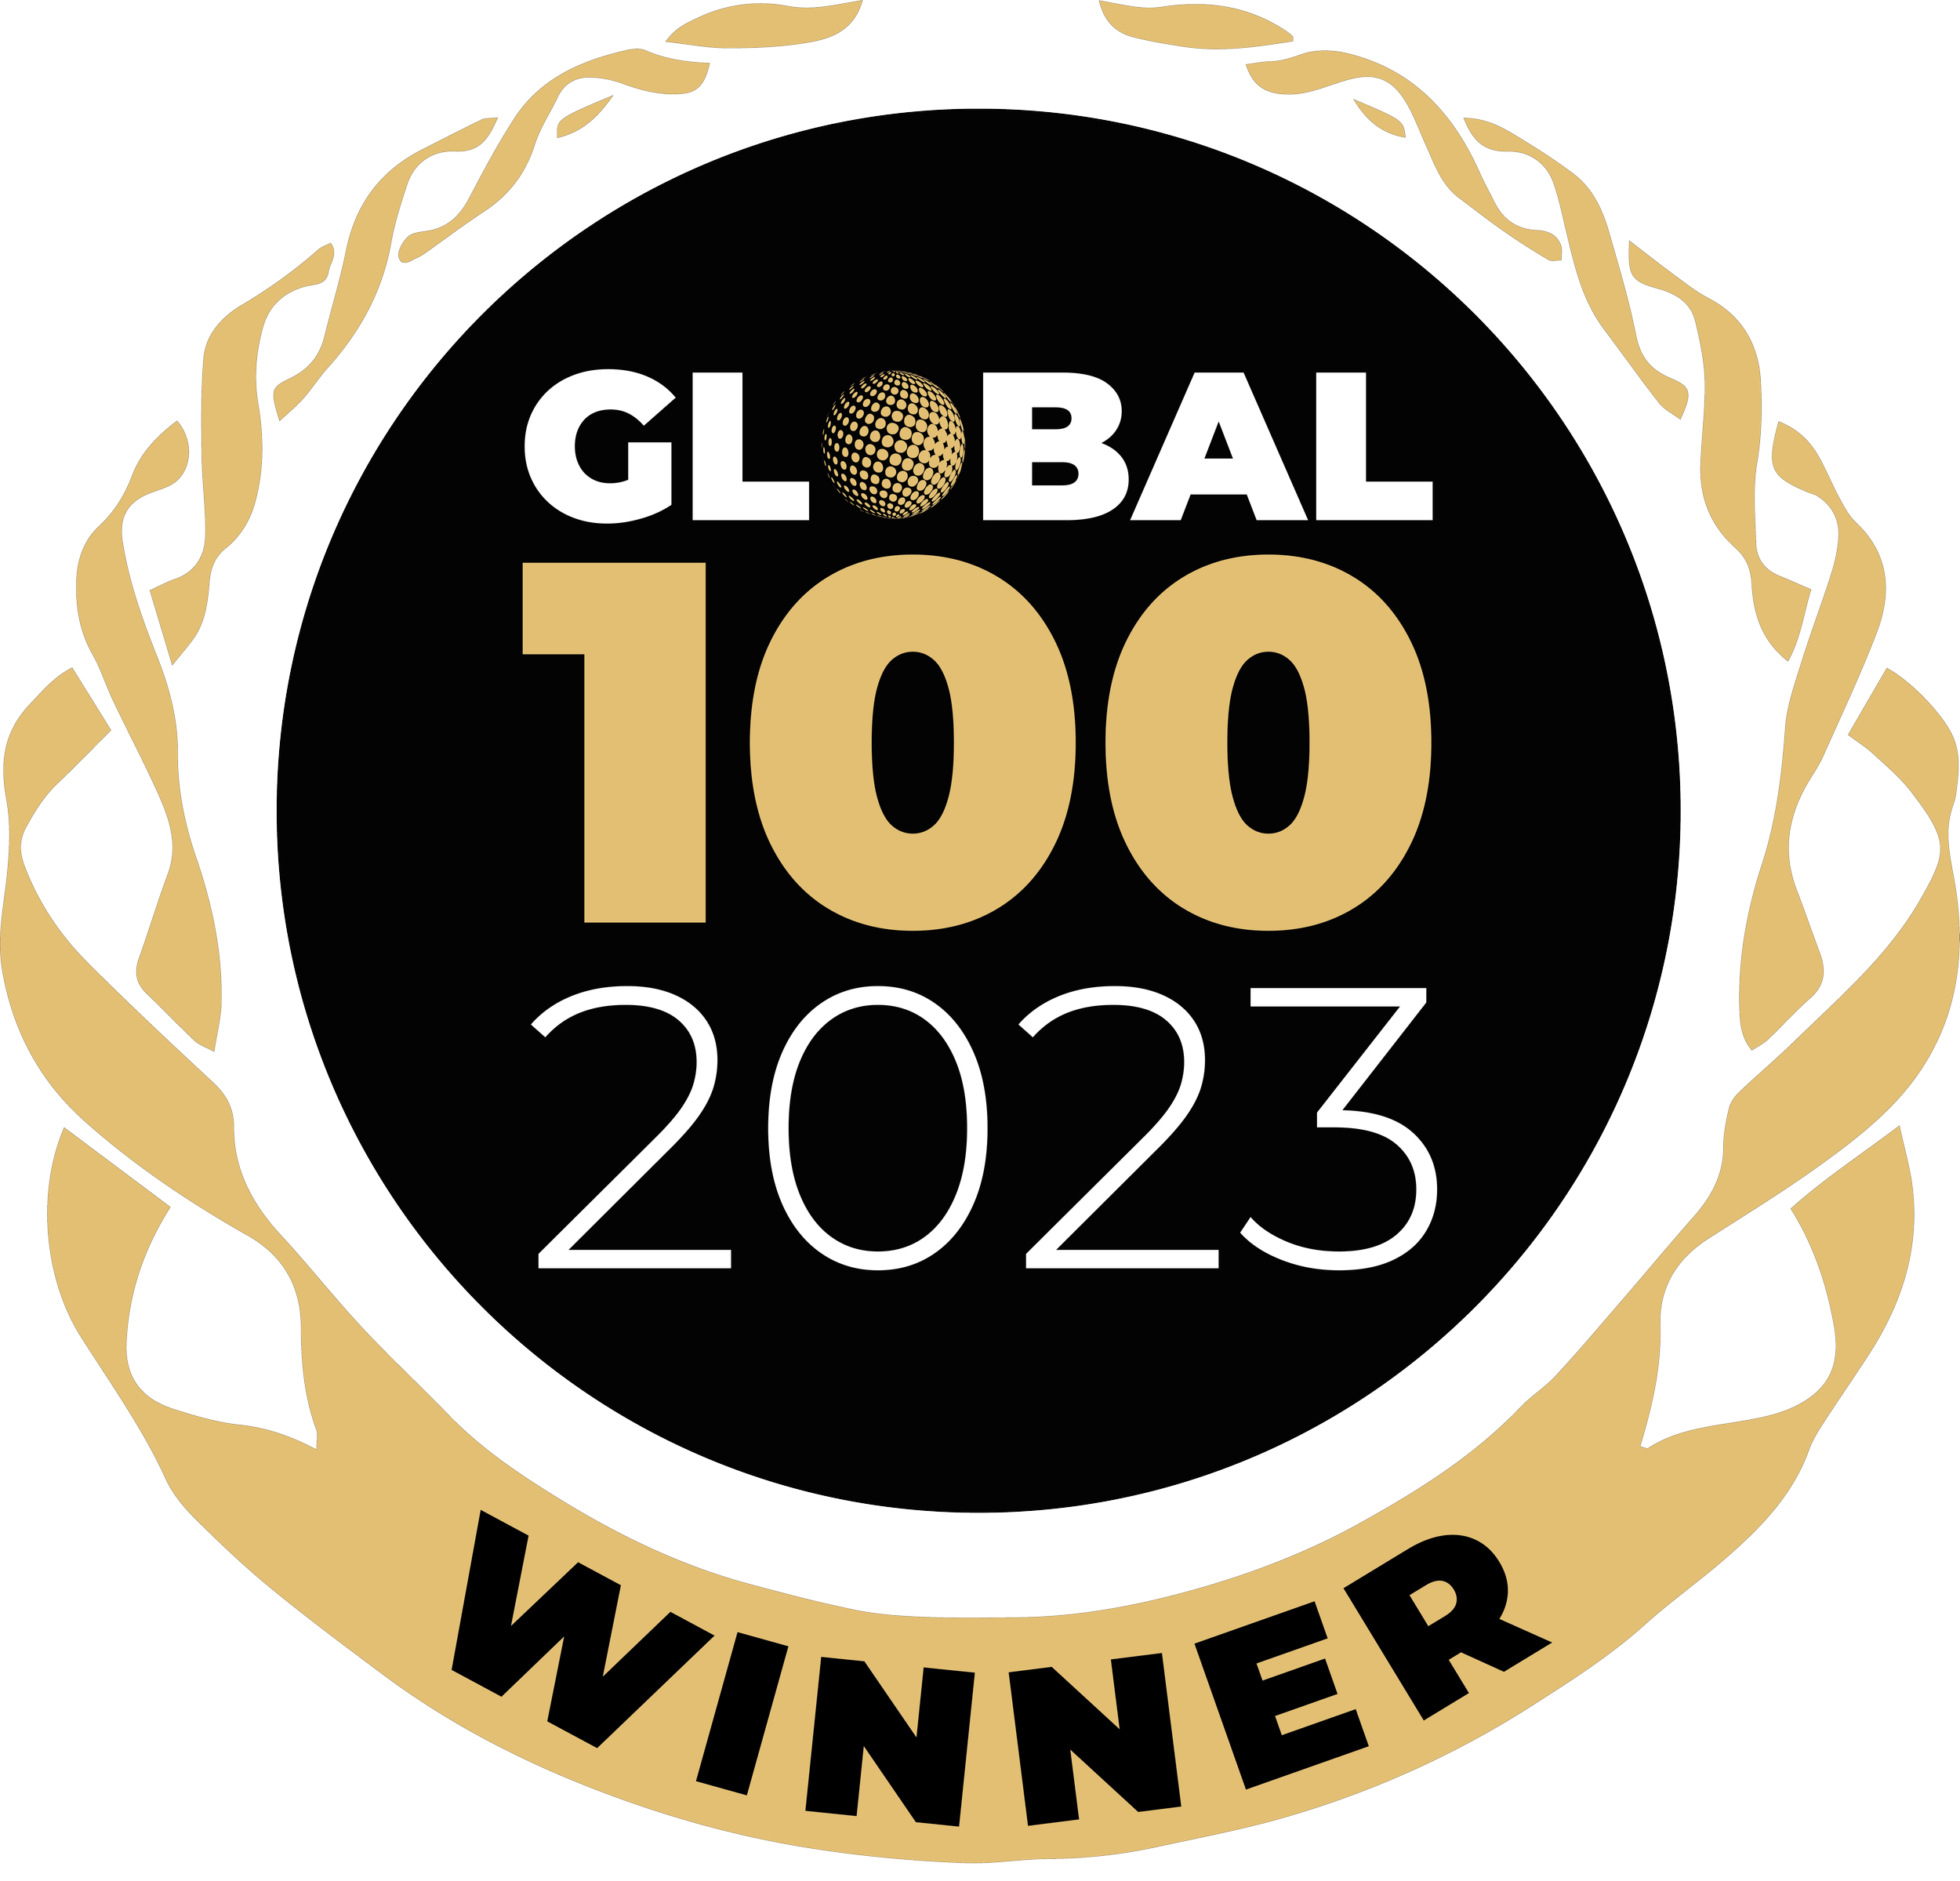 Global 100 2019 award logo Cavendish Employment Law Limited